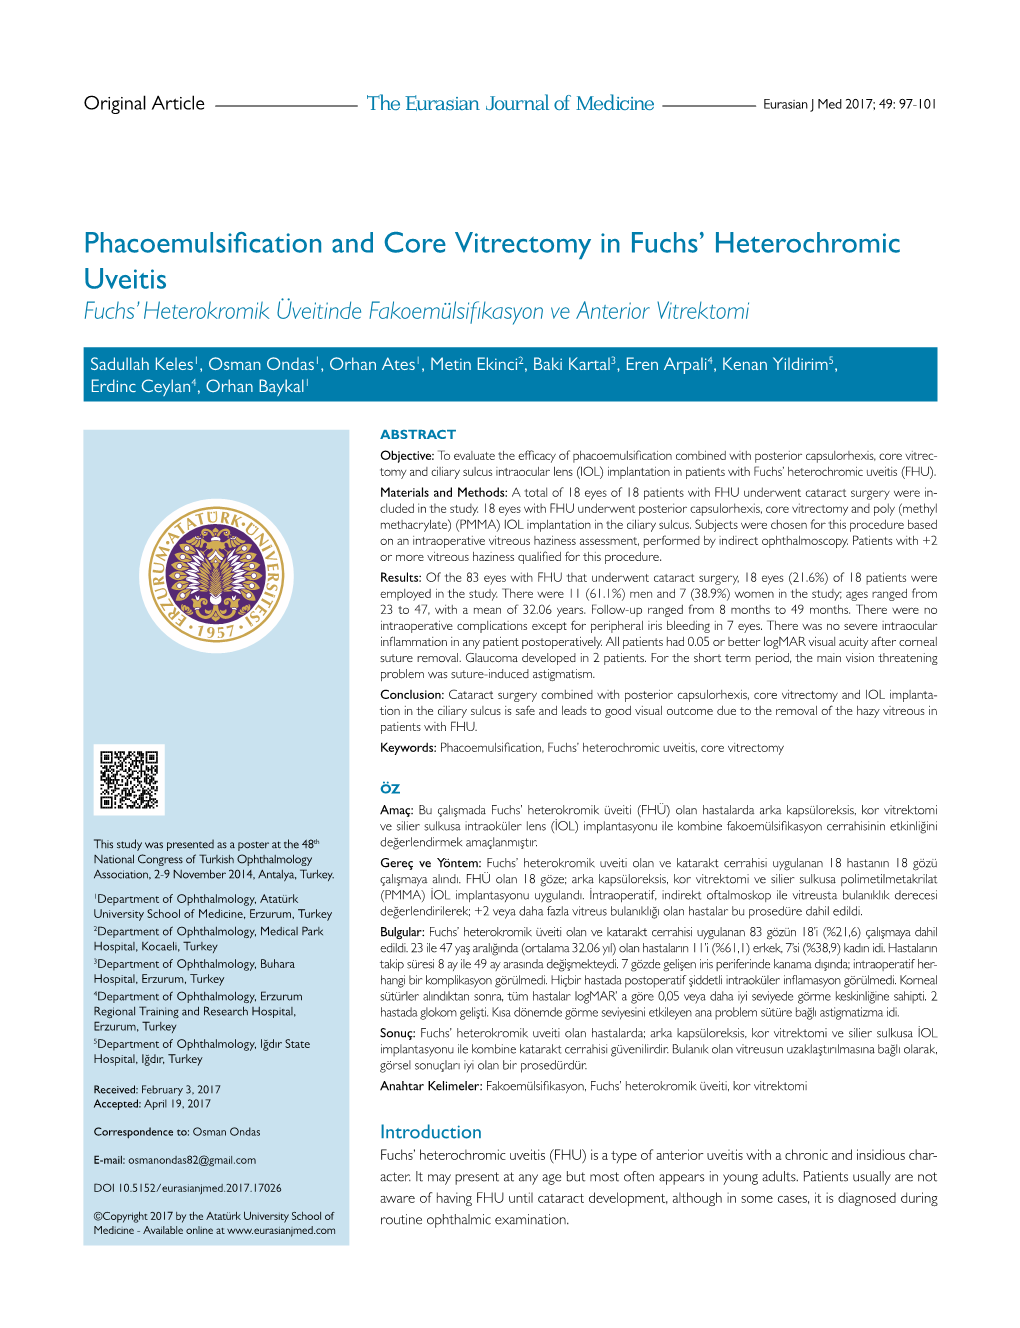 Phacoemulsification and Core Vitrectomy in Fuchs' Heterochromic